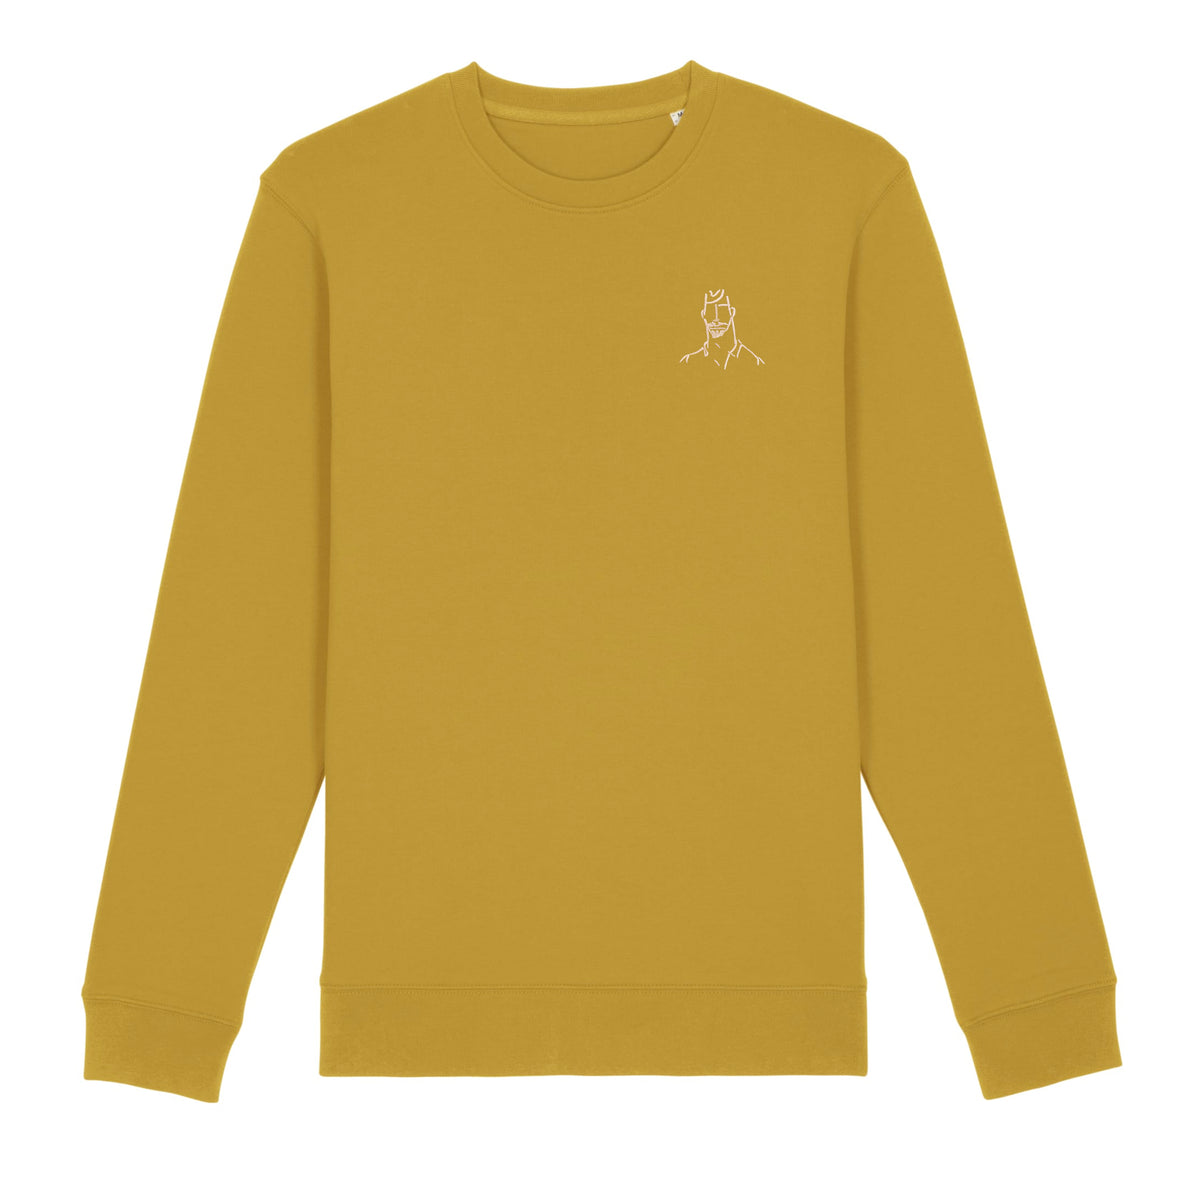 Mustard Sweatshirt. Boy